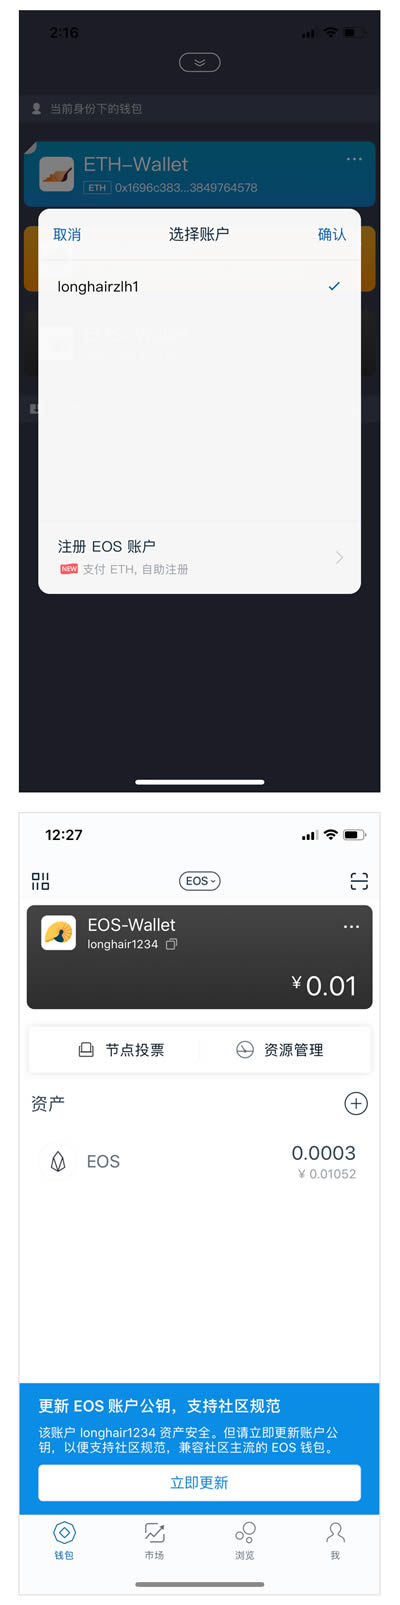 imToken钱包如何更新EOS账户公钥?